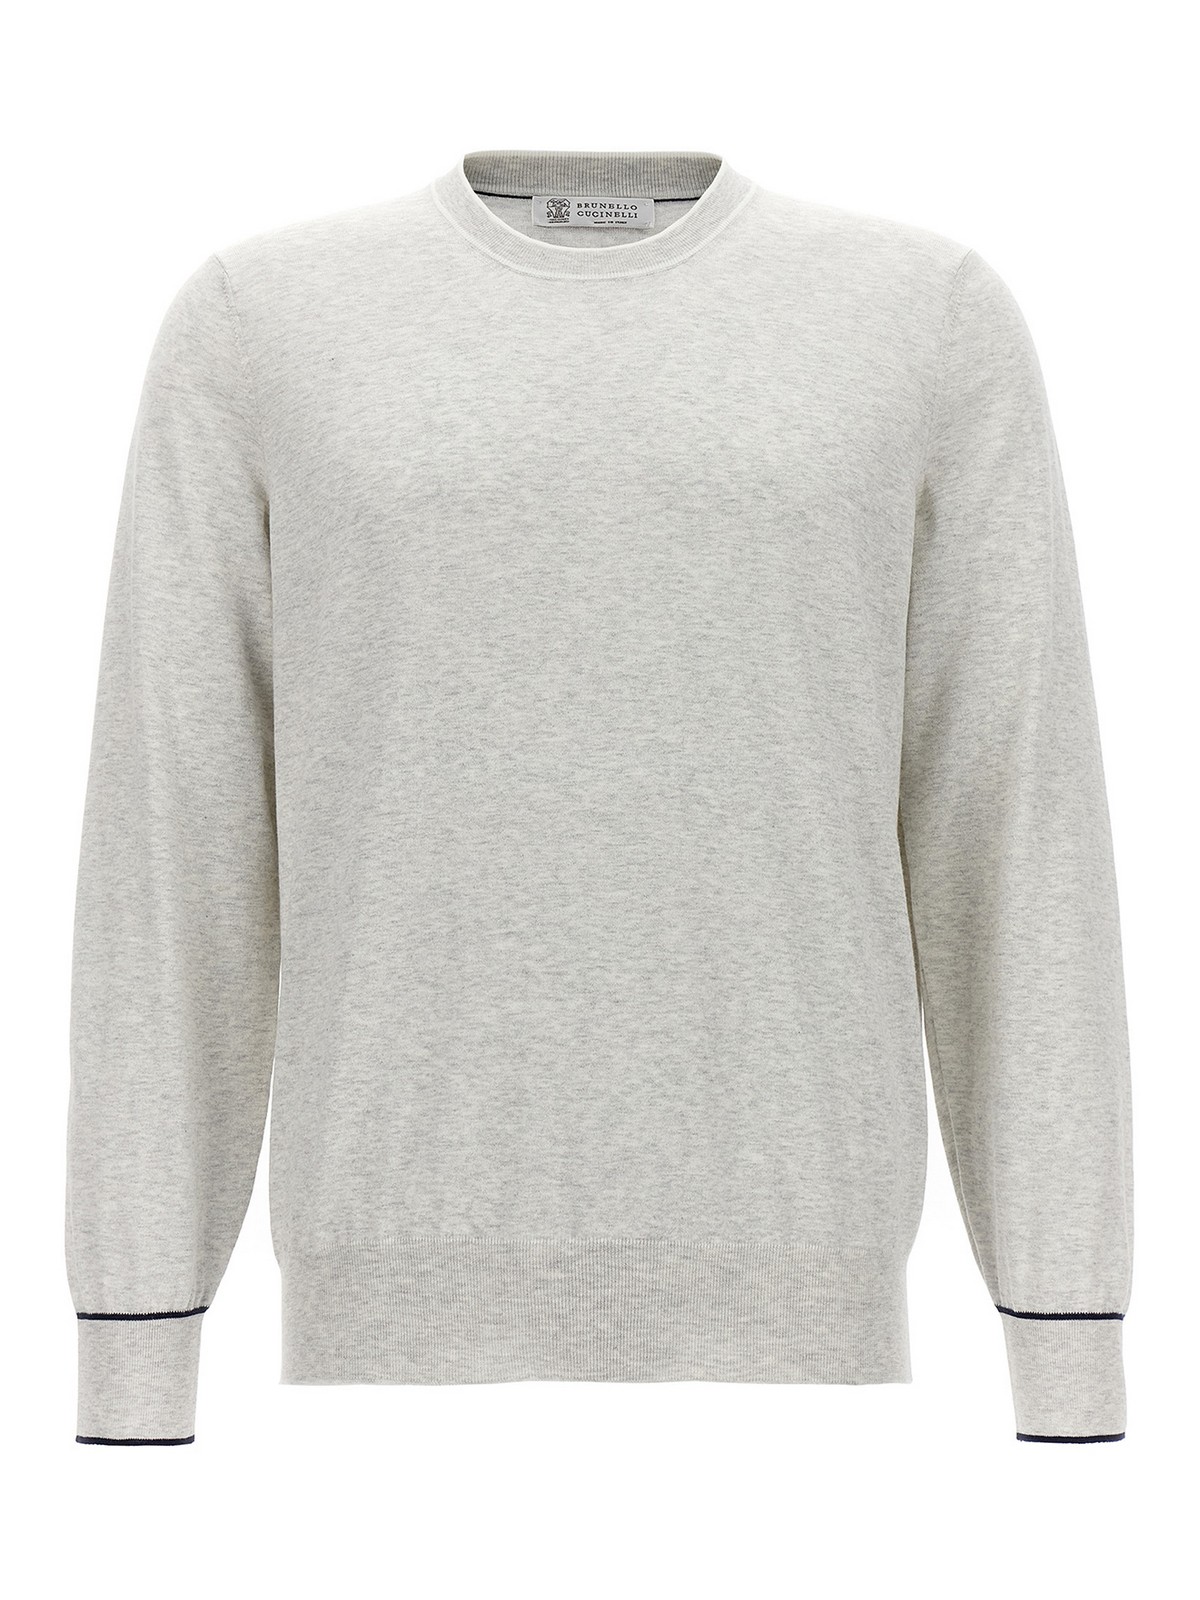 Superfine Cotton Crewneck Sweater